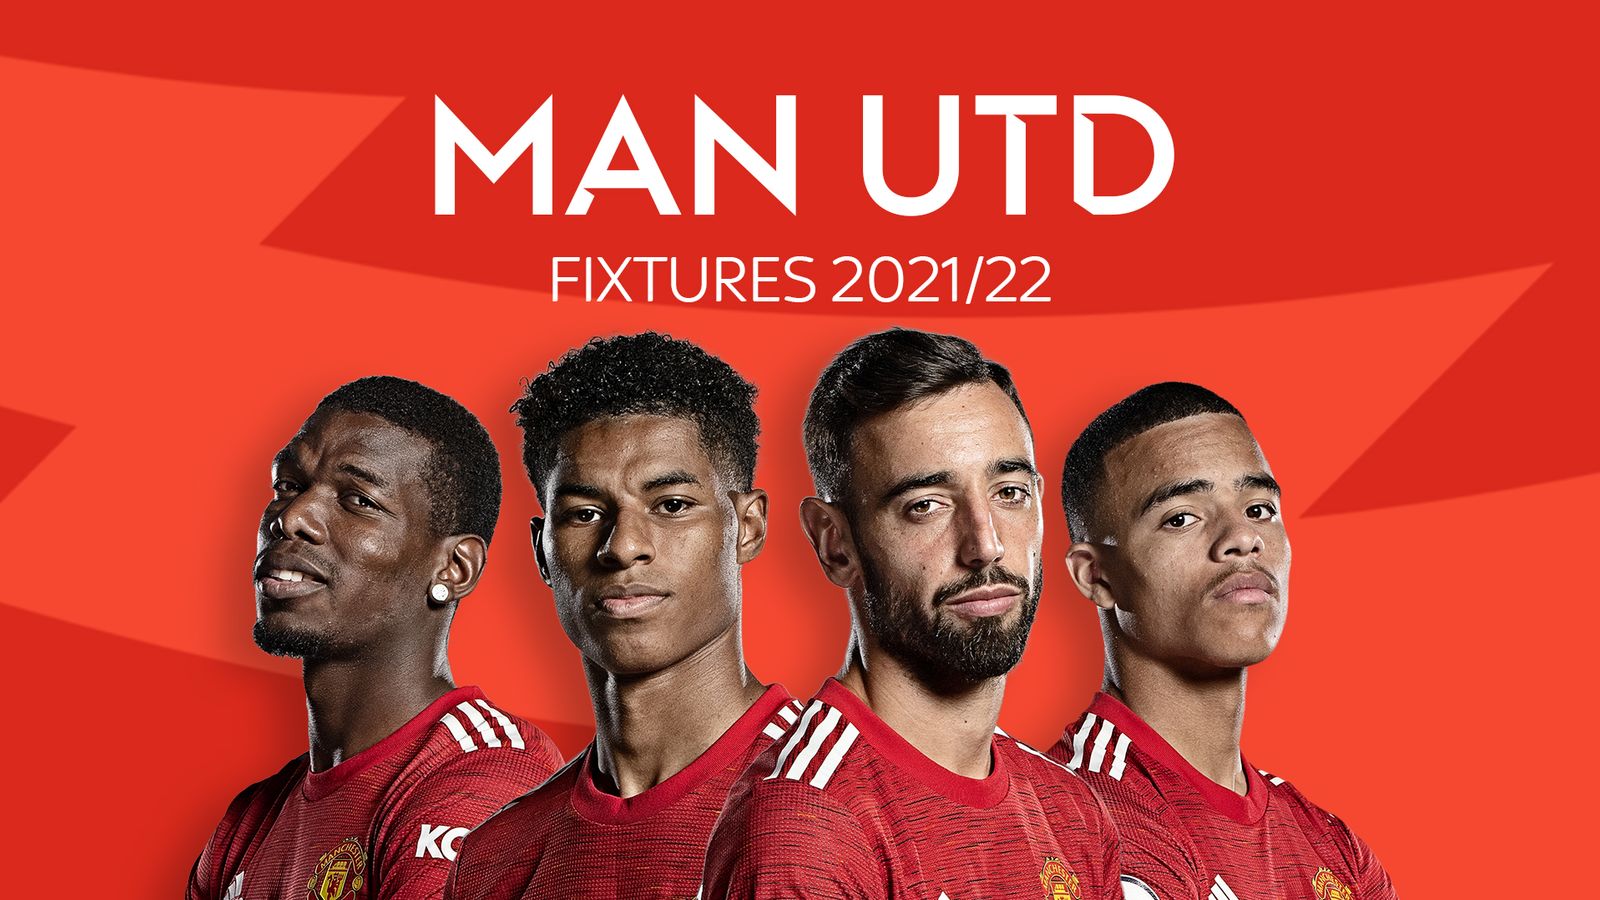 Manchester United Premier League 2021/22 fixtures and schedule